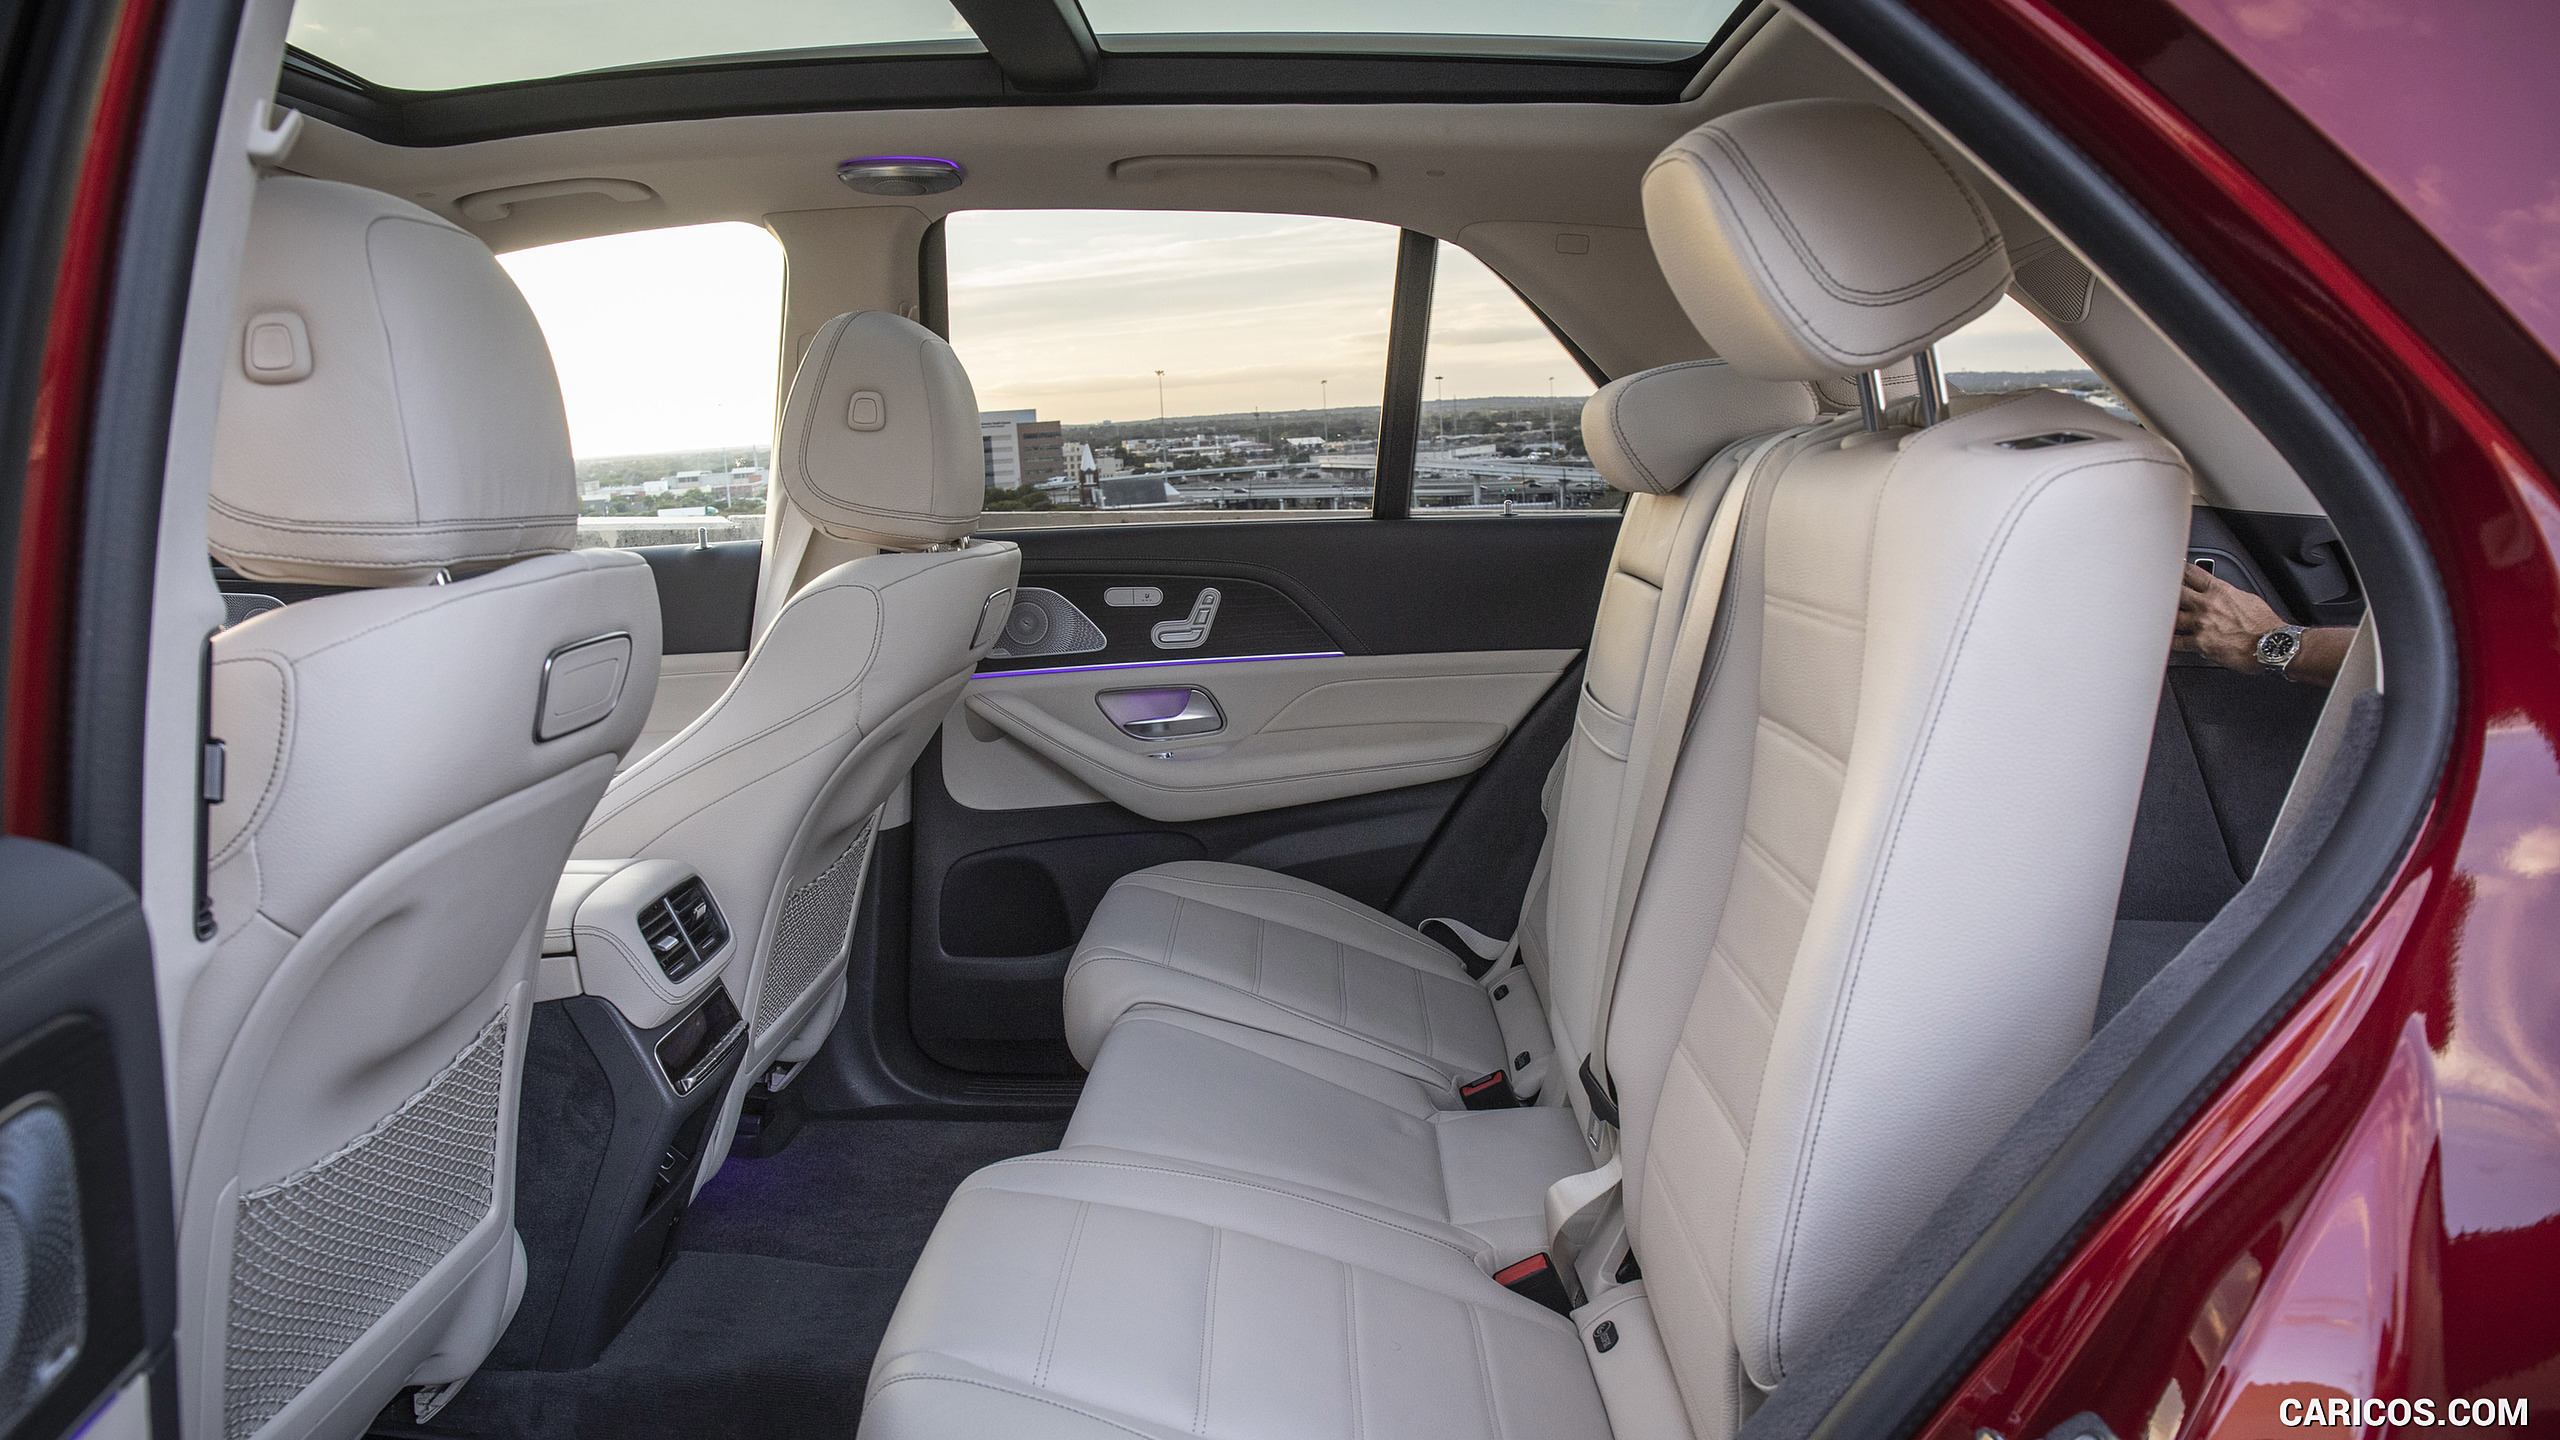 2020 Mercedes-Benz GLE 450 4MATIC (Color: Designo Hyazinth Red Metallic; US-Spec) - Interior, Rear Seats, #332 of 358